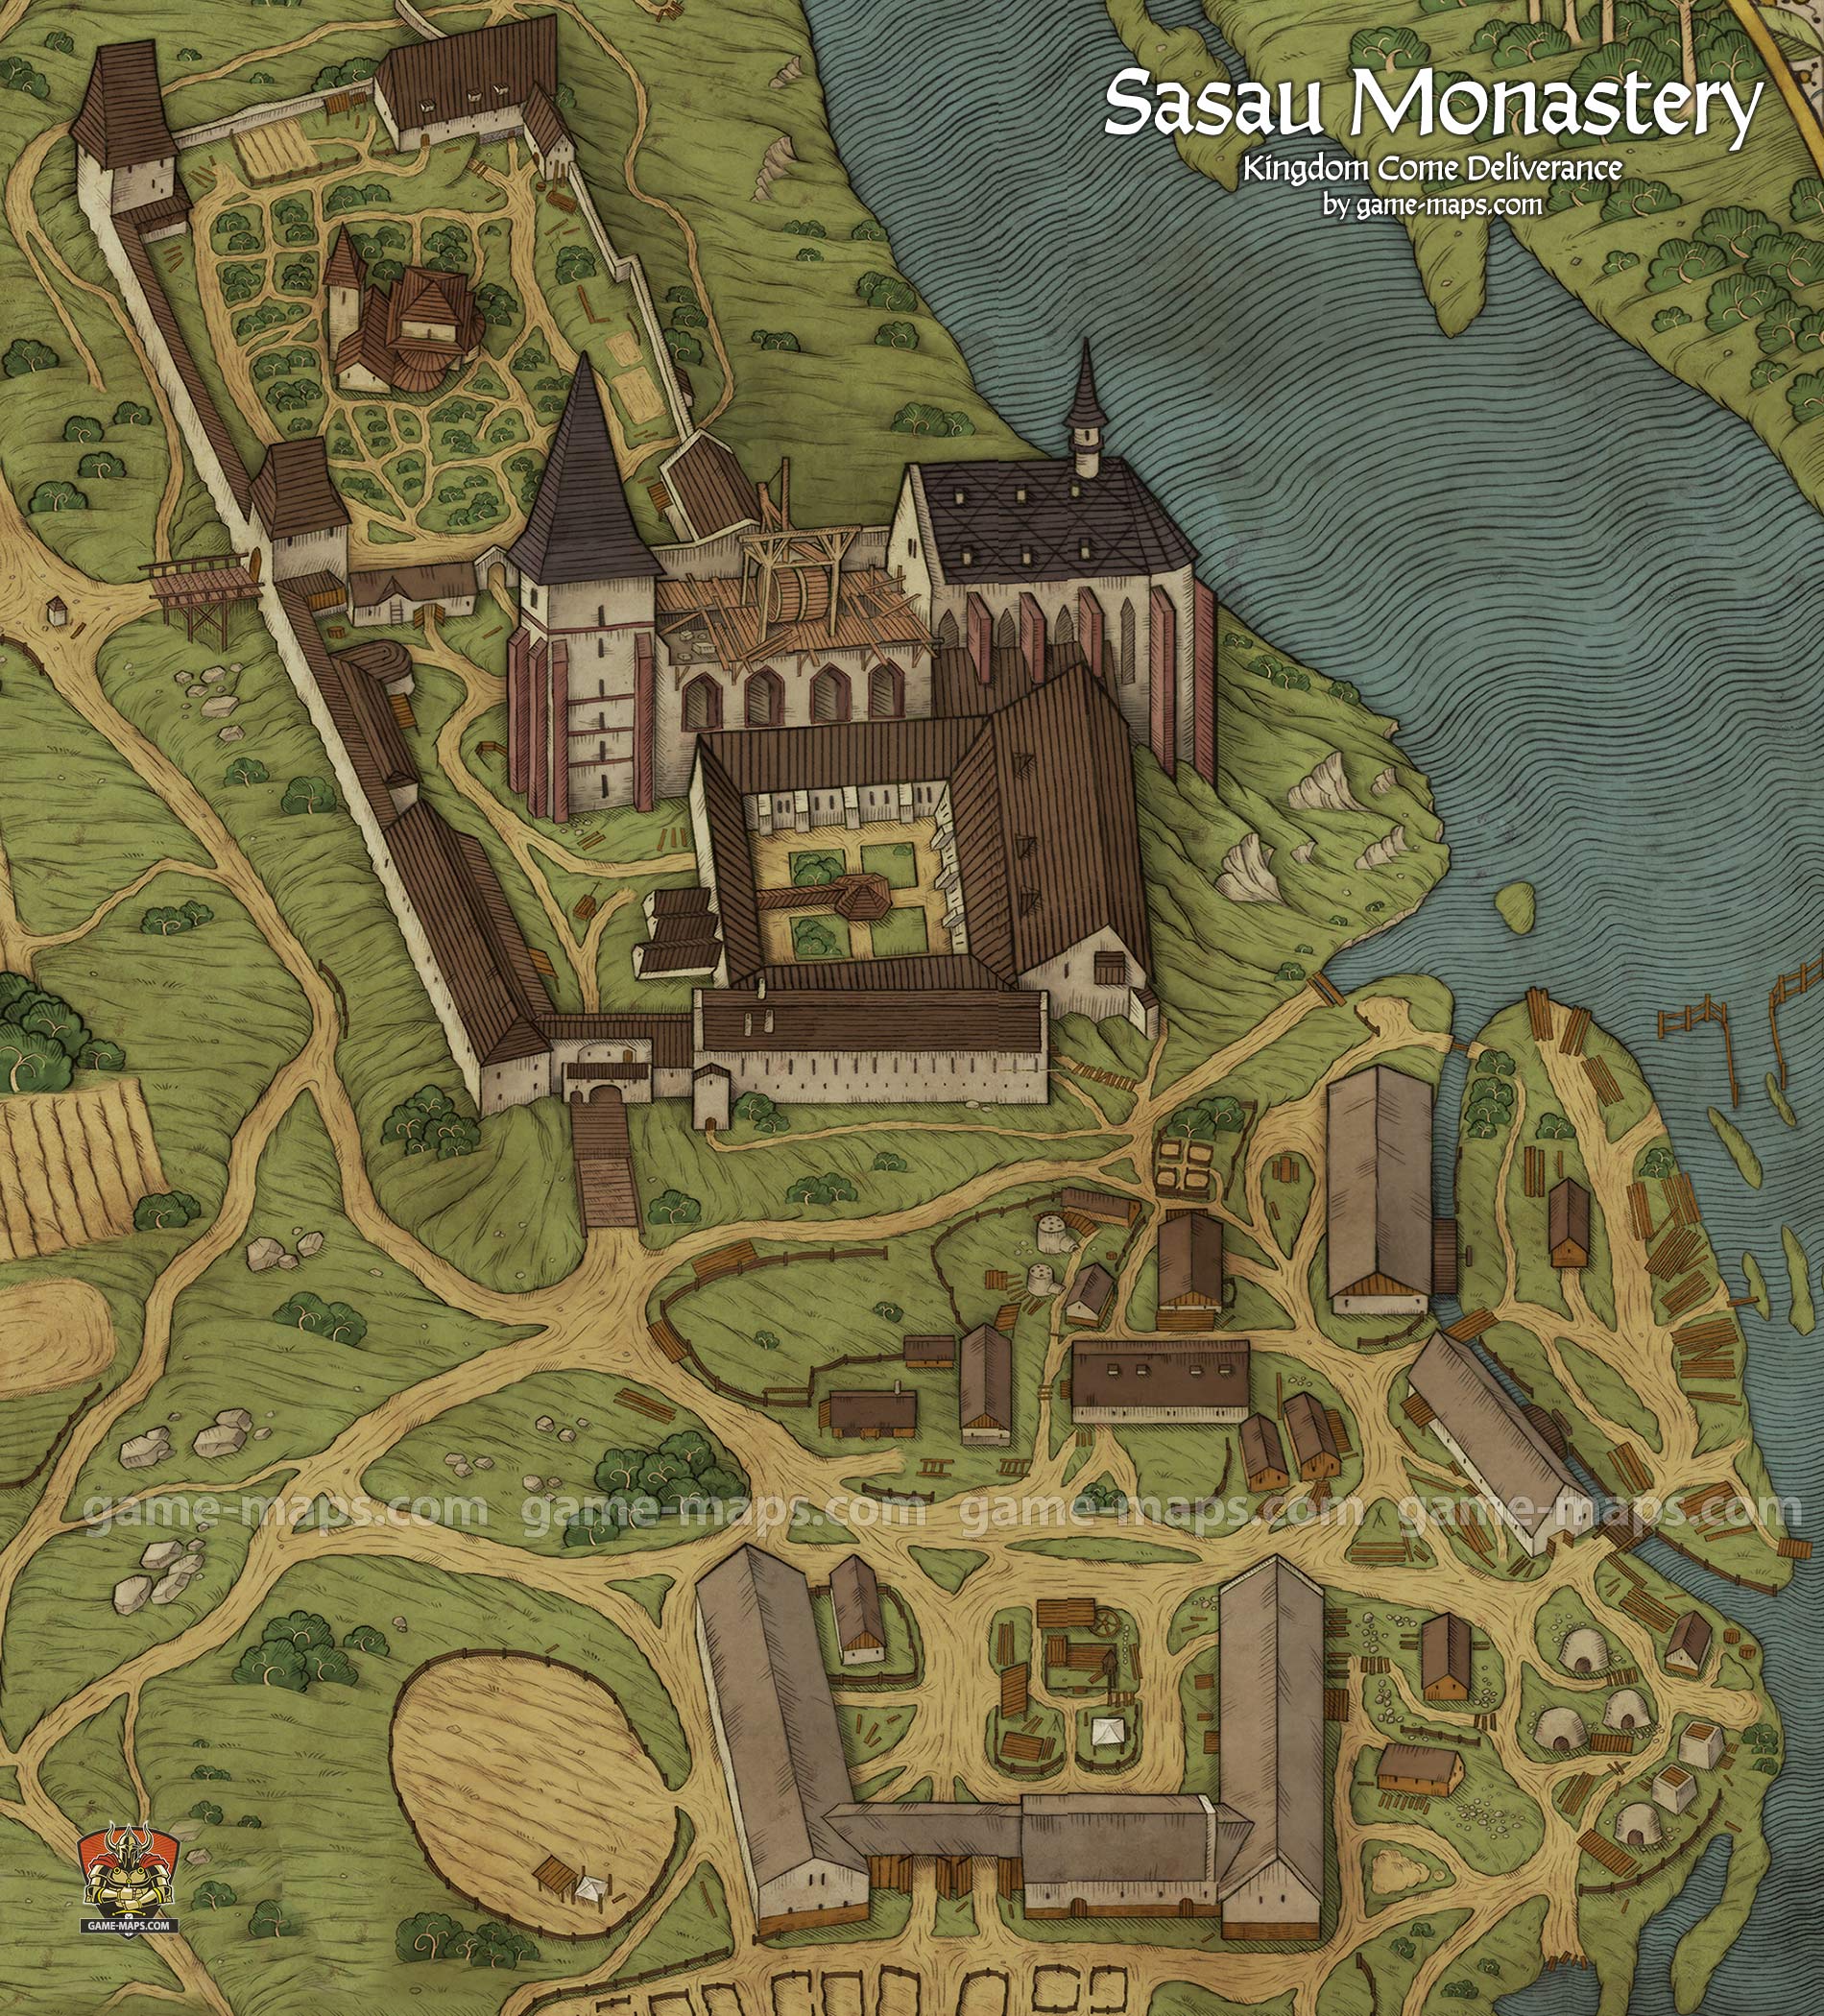 Sasau Monastery Map for Kingdom Come Deliverance